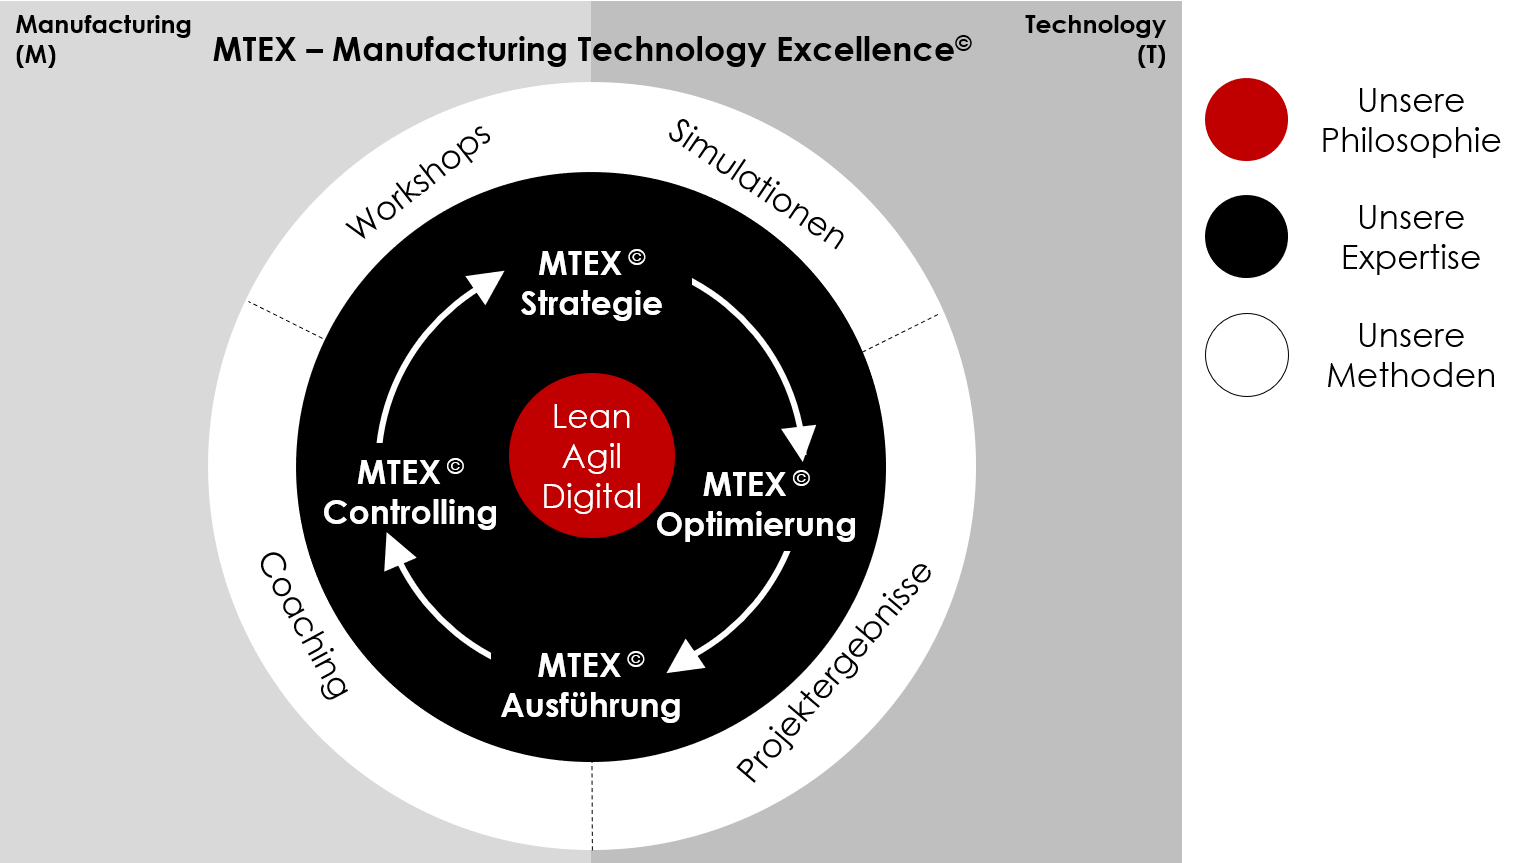 CWMC MTEX - Manufacturing Technology Excellence